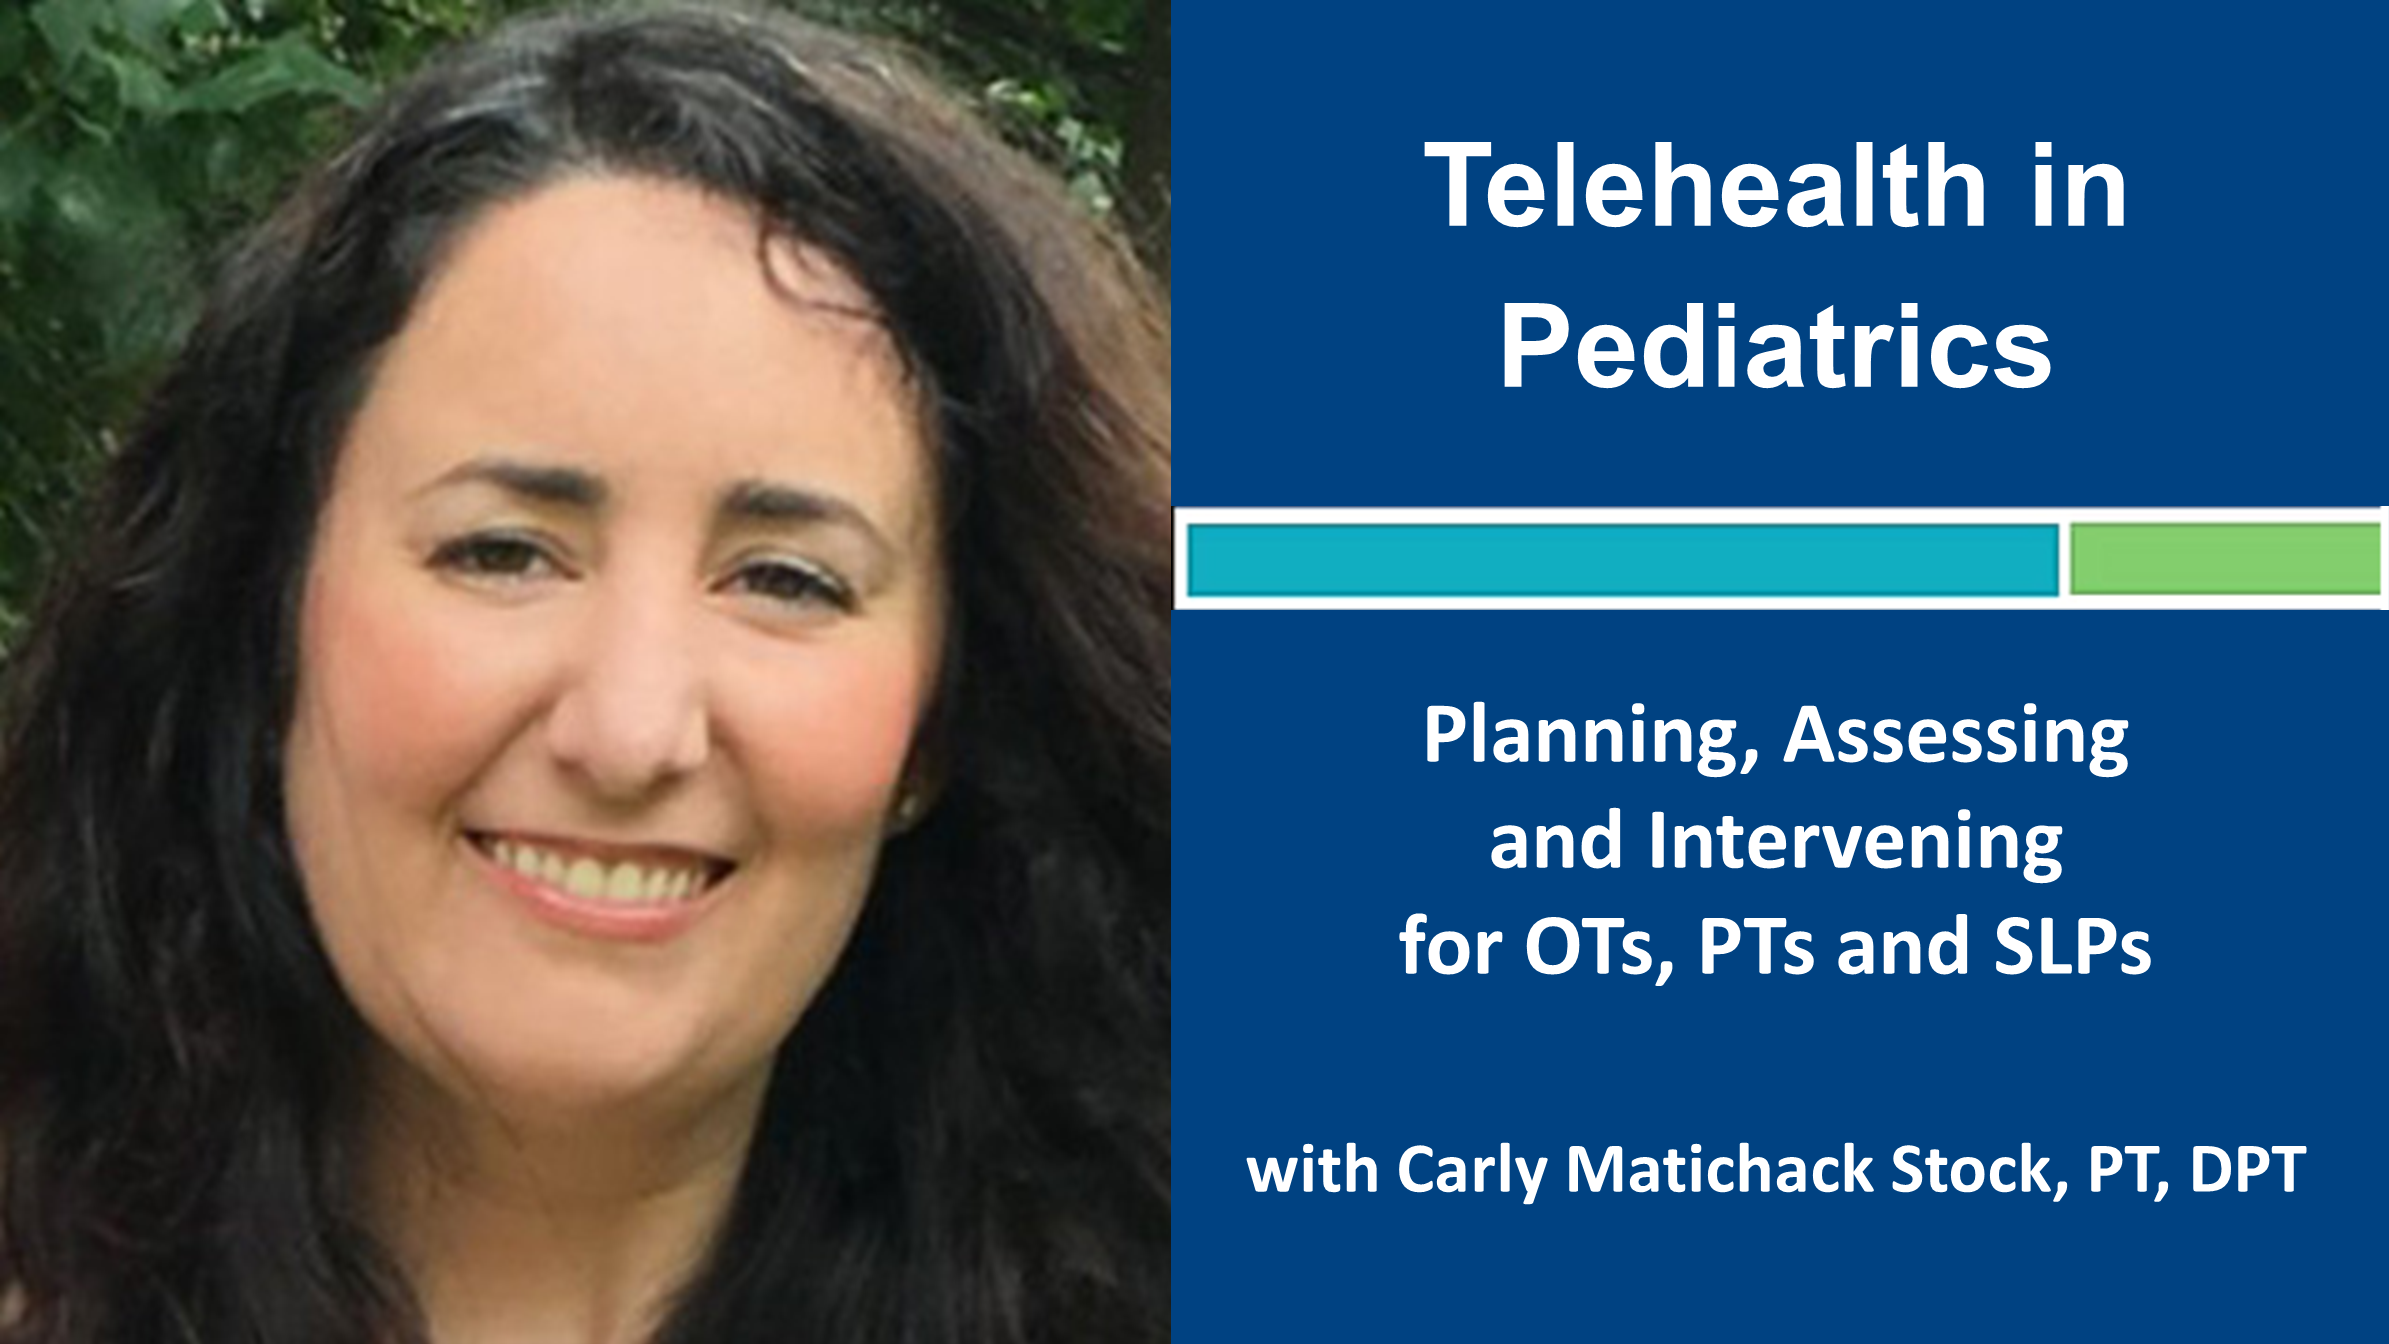 Webinar 8: Telehealth in Pediatrics with Carly Matichak Stock, PT, DPT